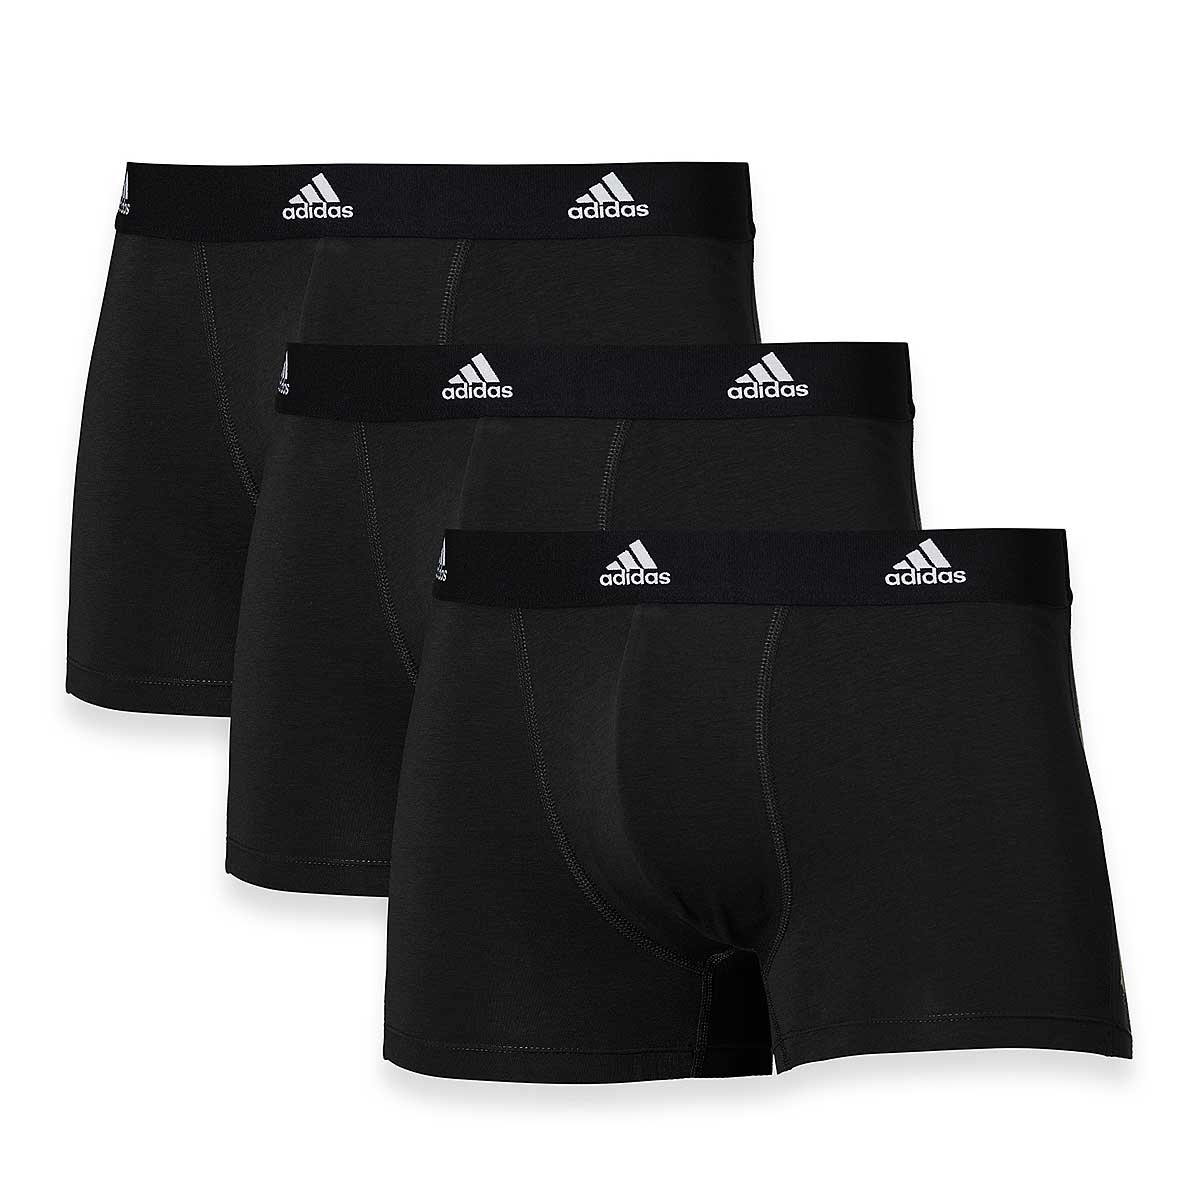 Adidas Underwear Trunk (3Pk), Black